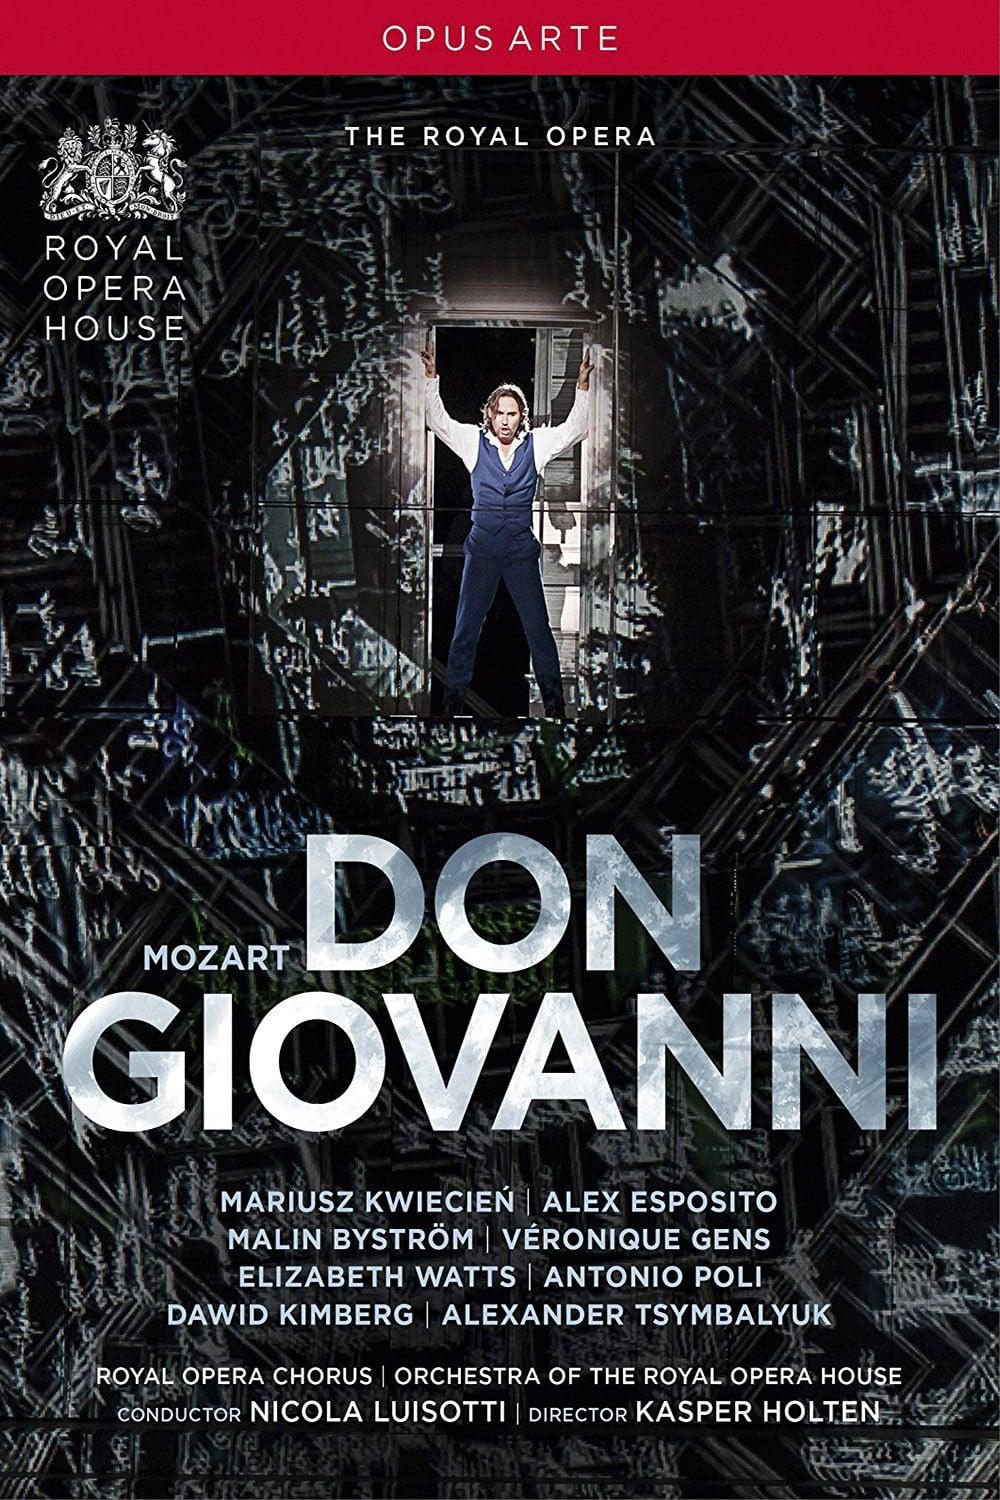 Mozart: Don Giovanni (Royal Opera) poster